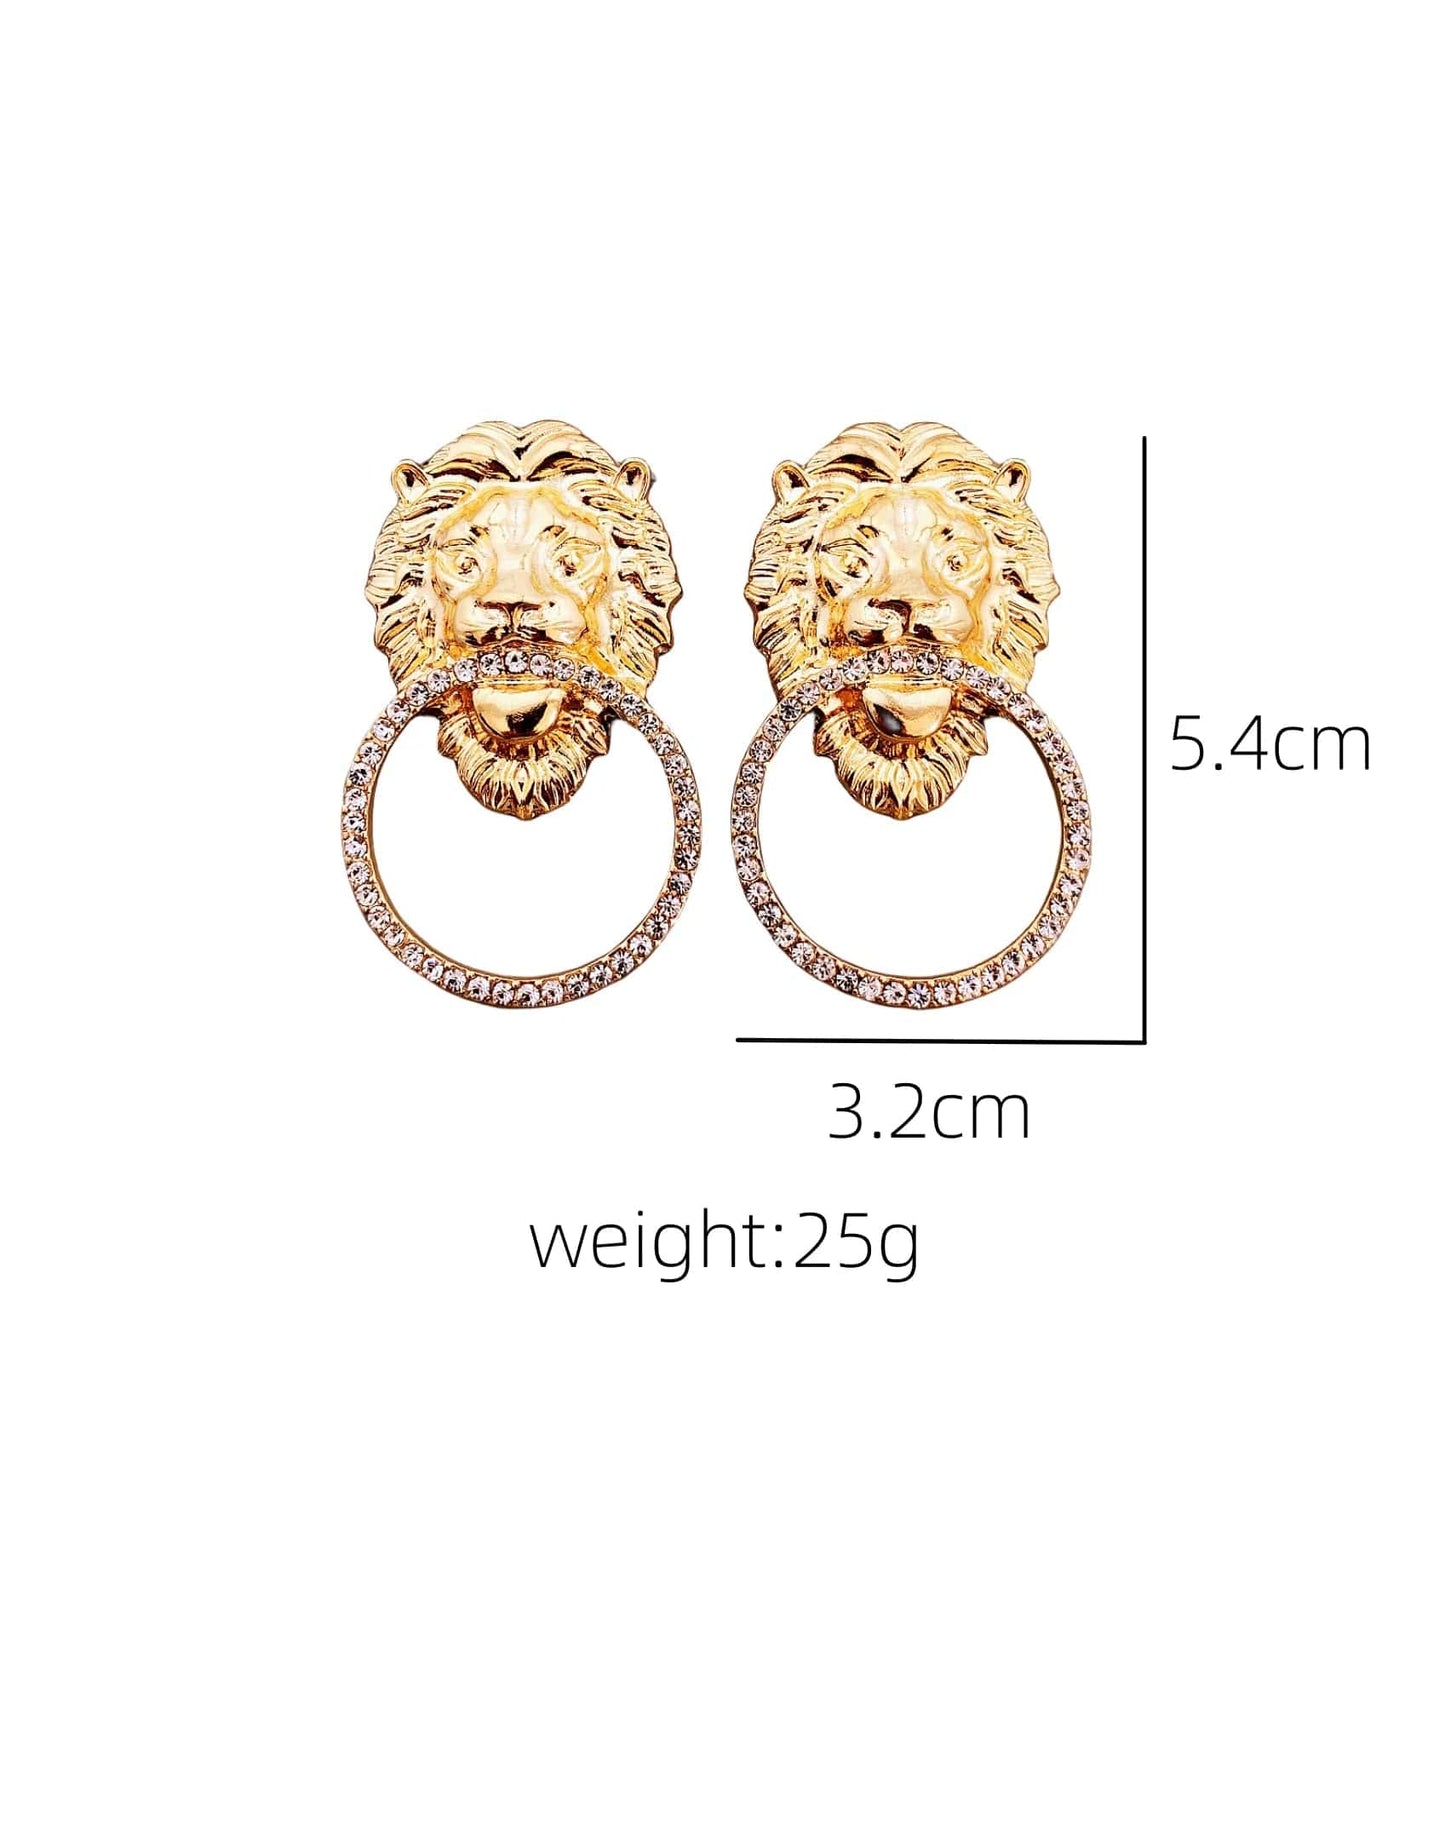 ALDO Jewelry Unique  Stylish Lion Head Round Hoop Stud Earrings with Rhinestones